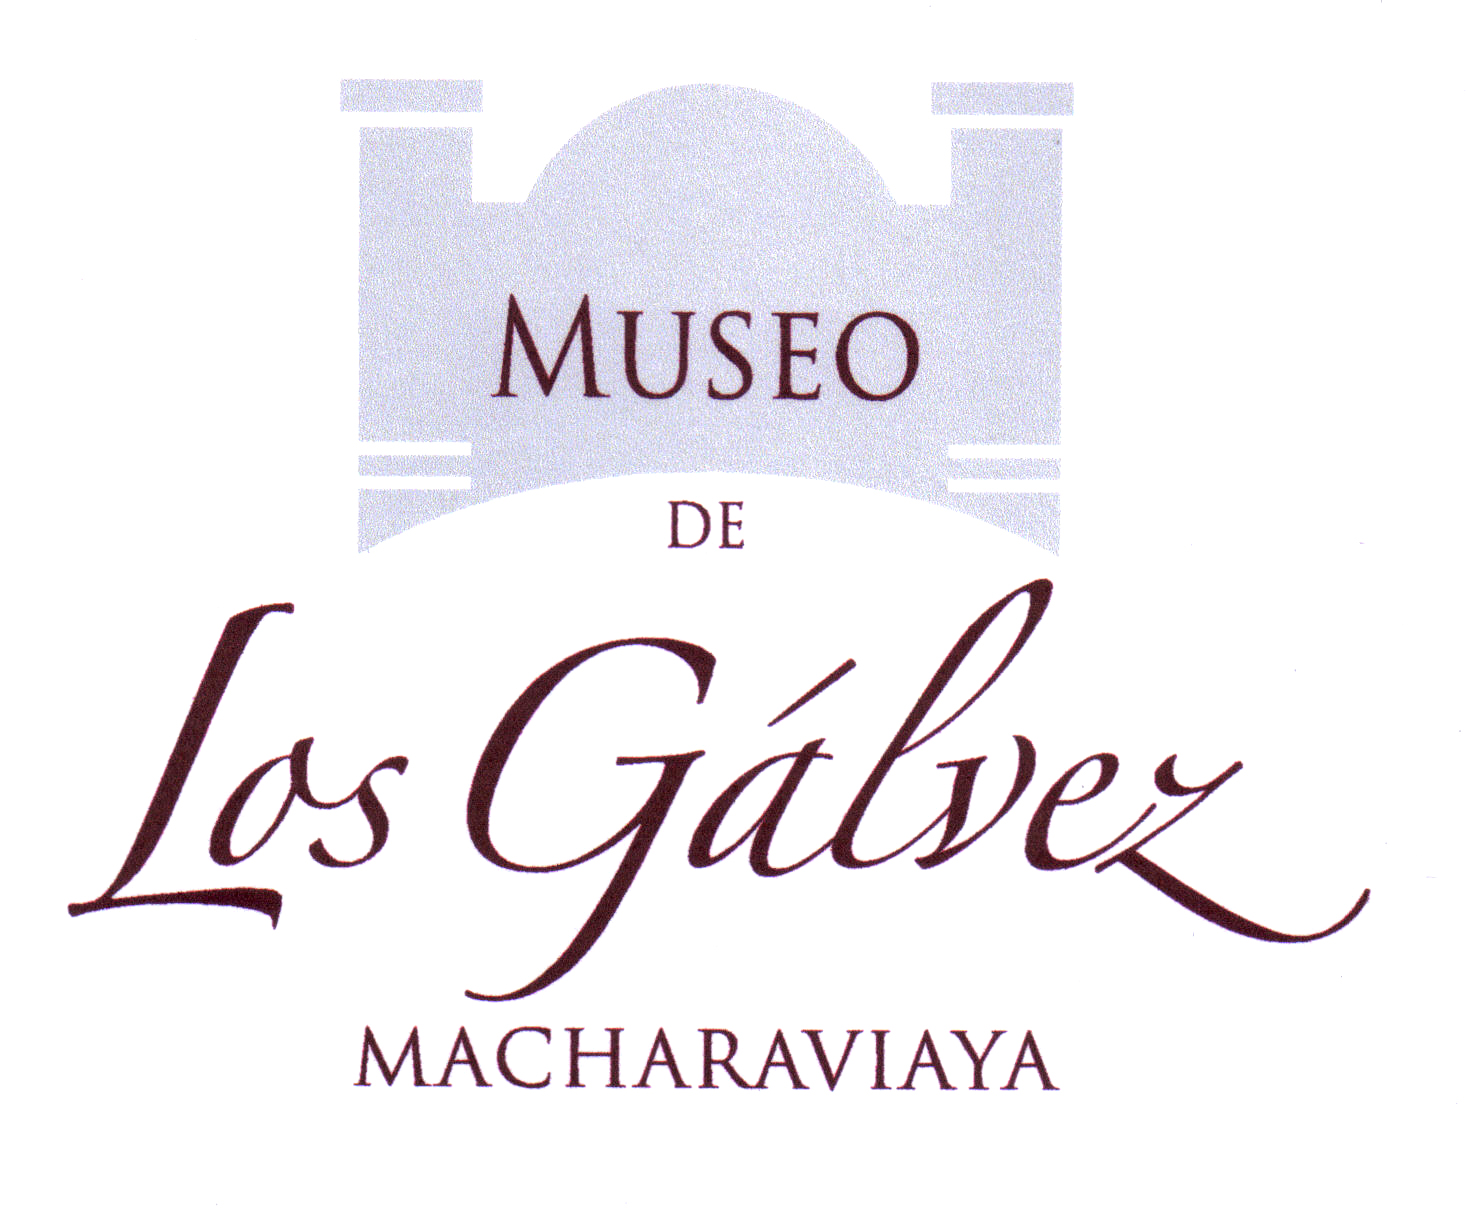 Museo Galvez Macharaviaya